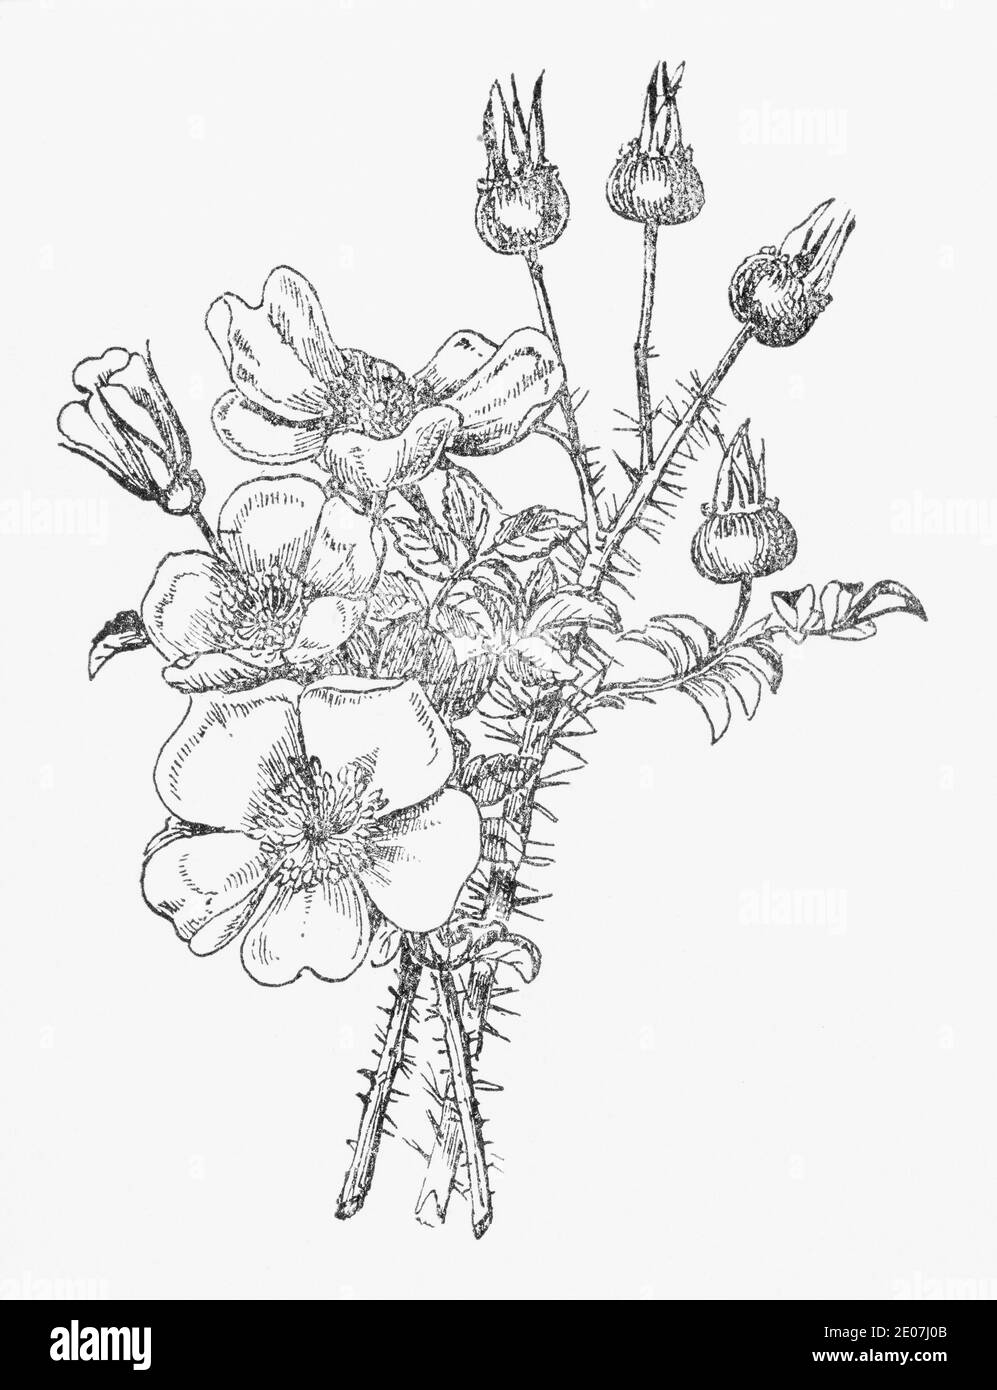 Alte botanische Illustration Gravur von Burnett Rose / Rosa spinosissima, Rosa pimpinellifolia. Siehe Hinweise Stockfoto